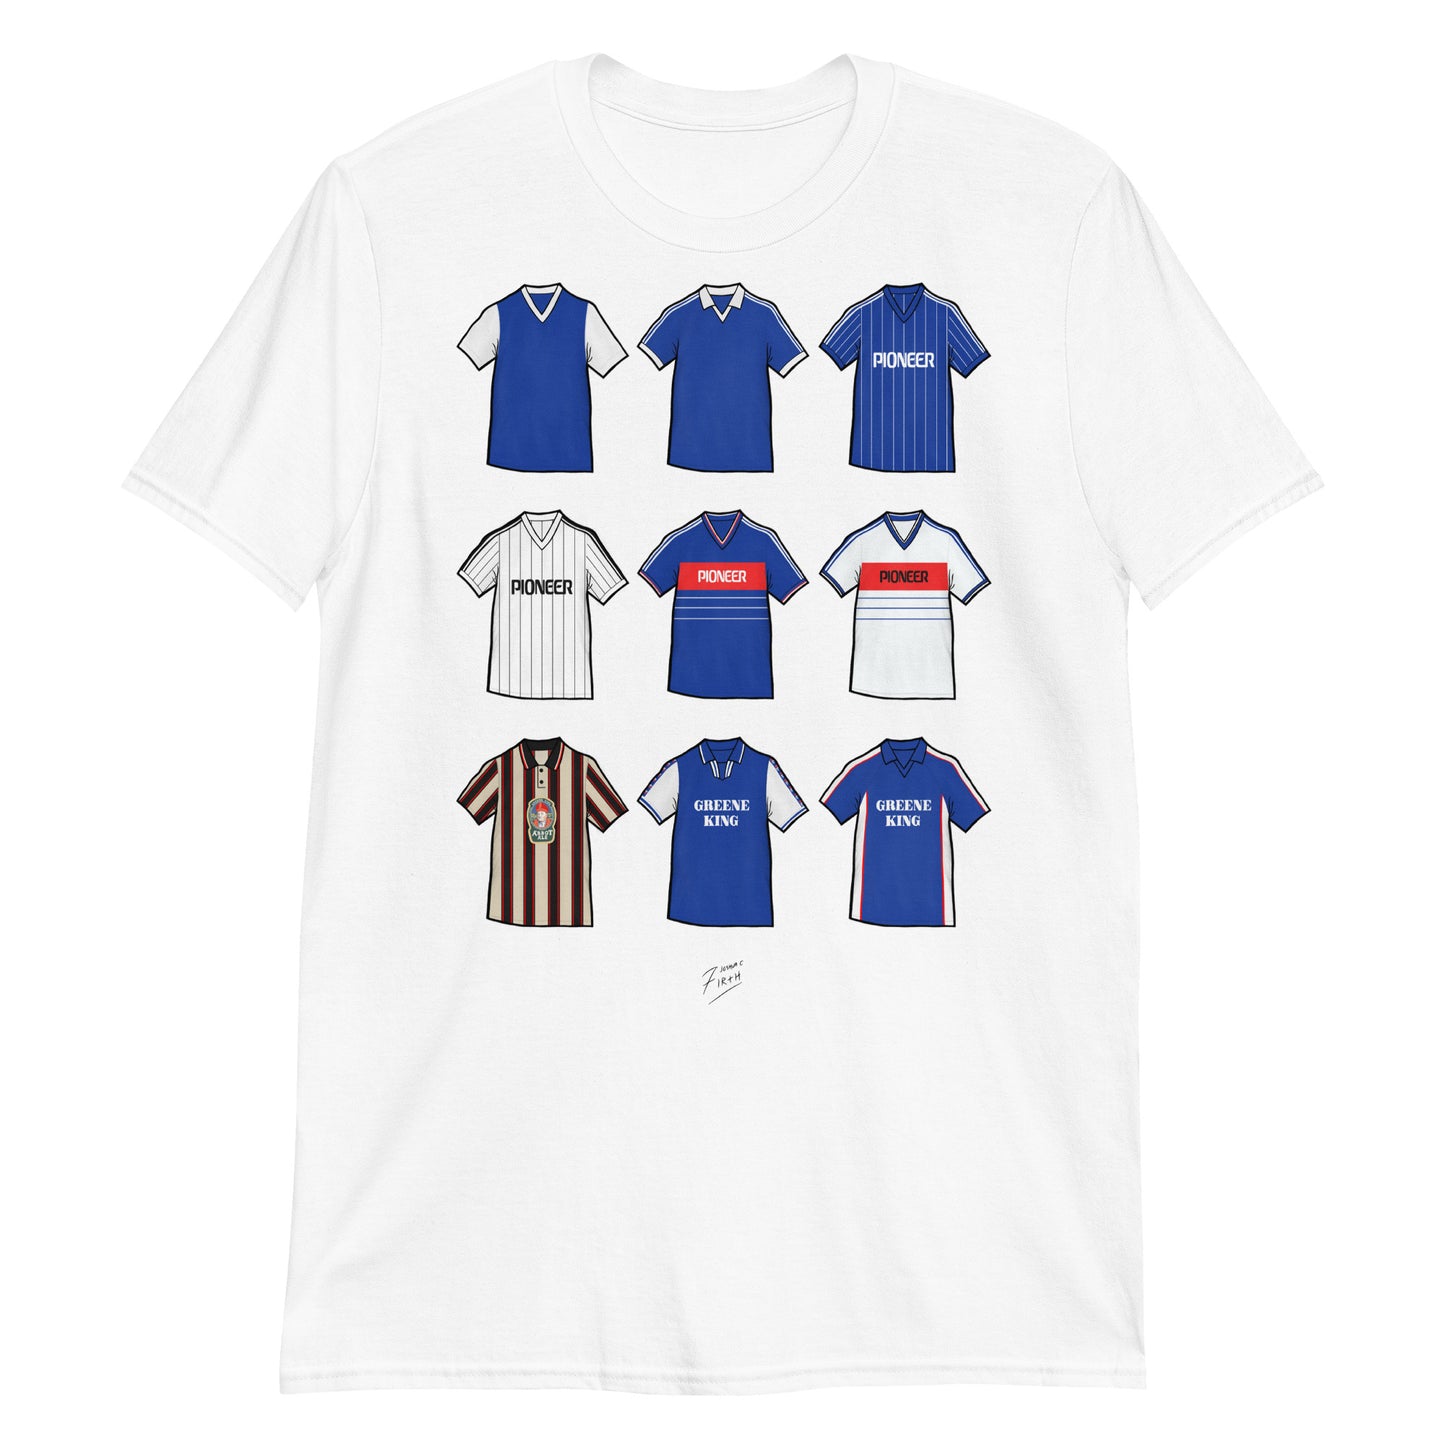 Ipswich Retro Shirts Illustrated Football T-Shirt